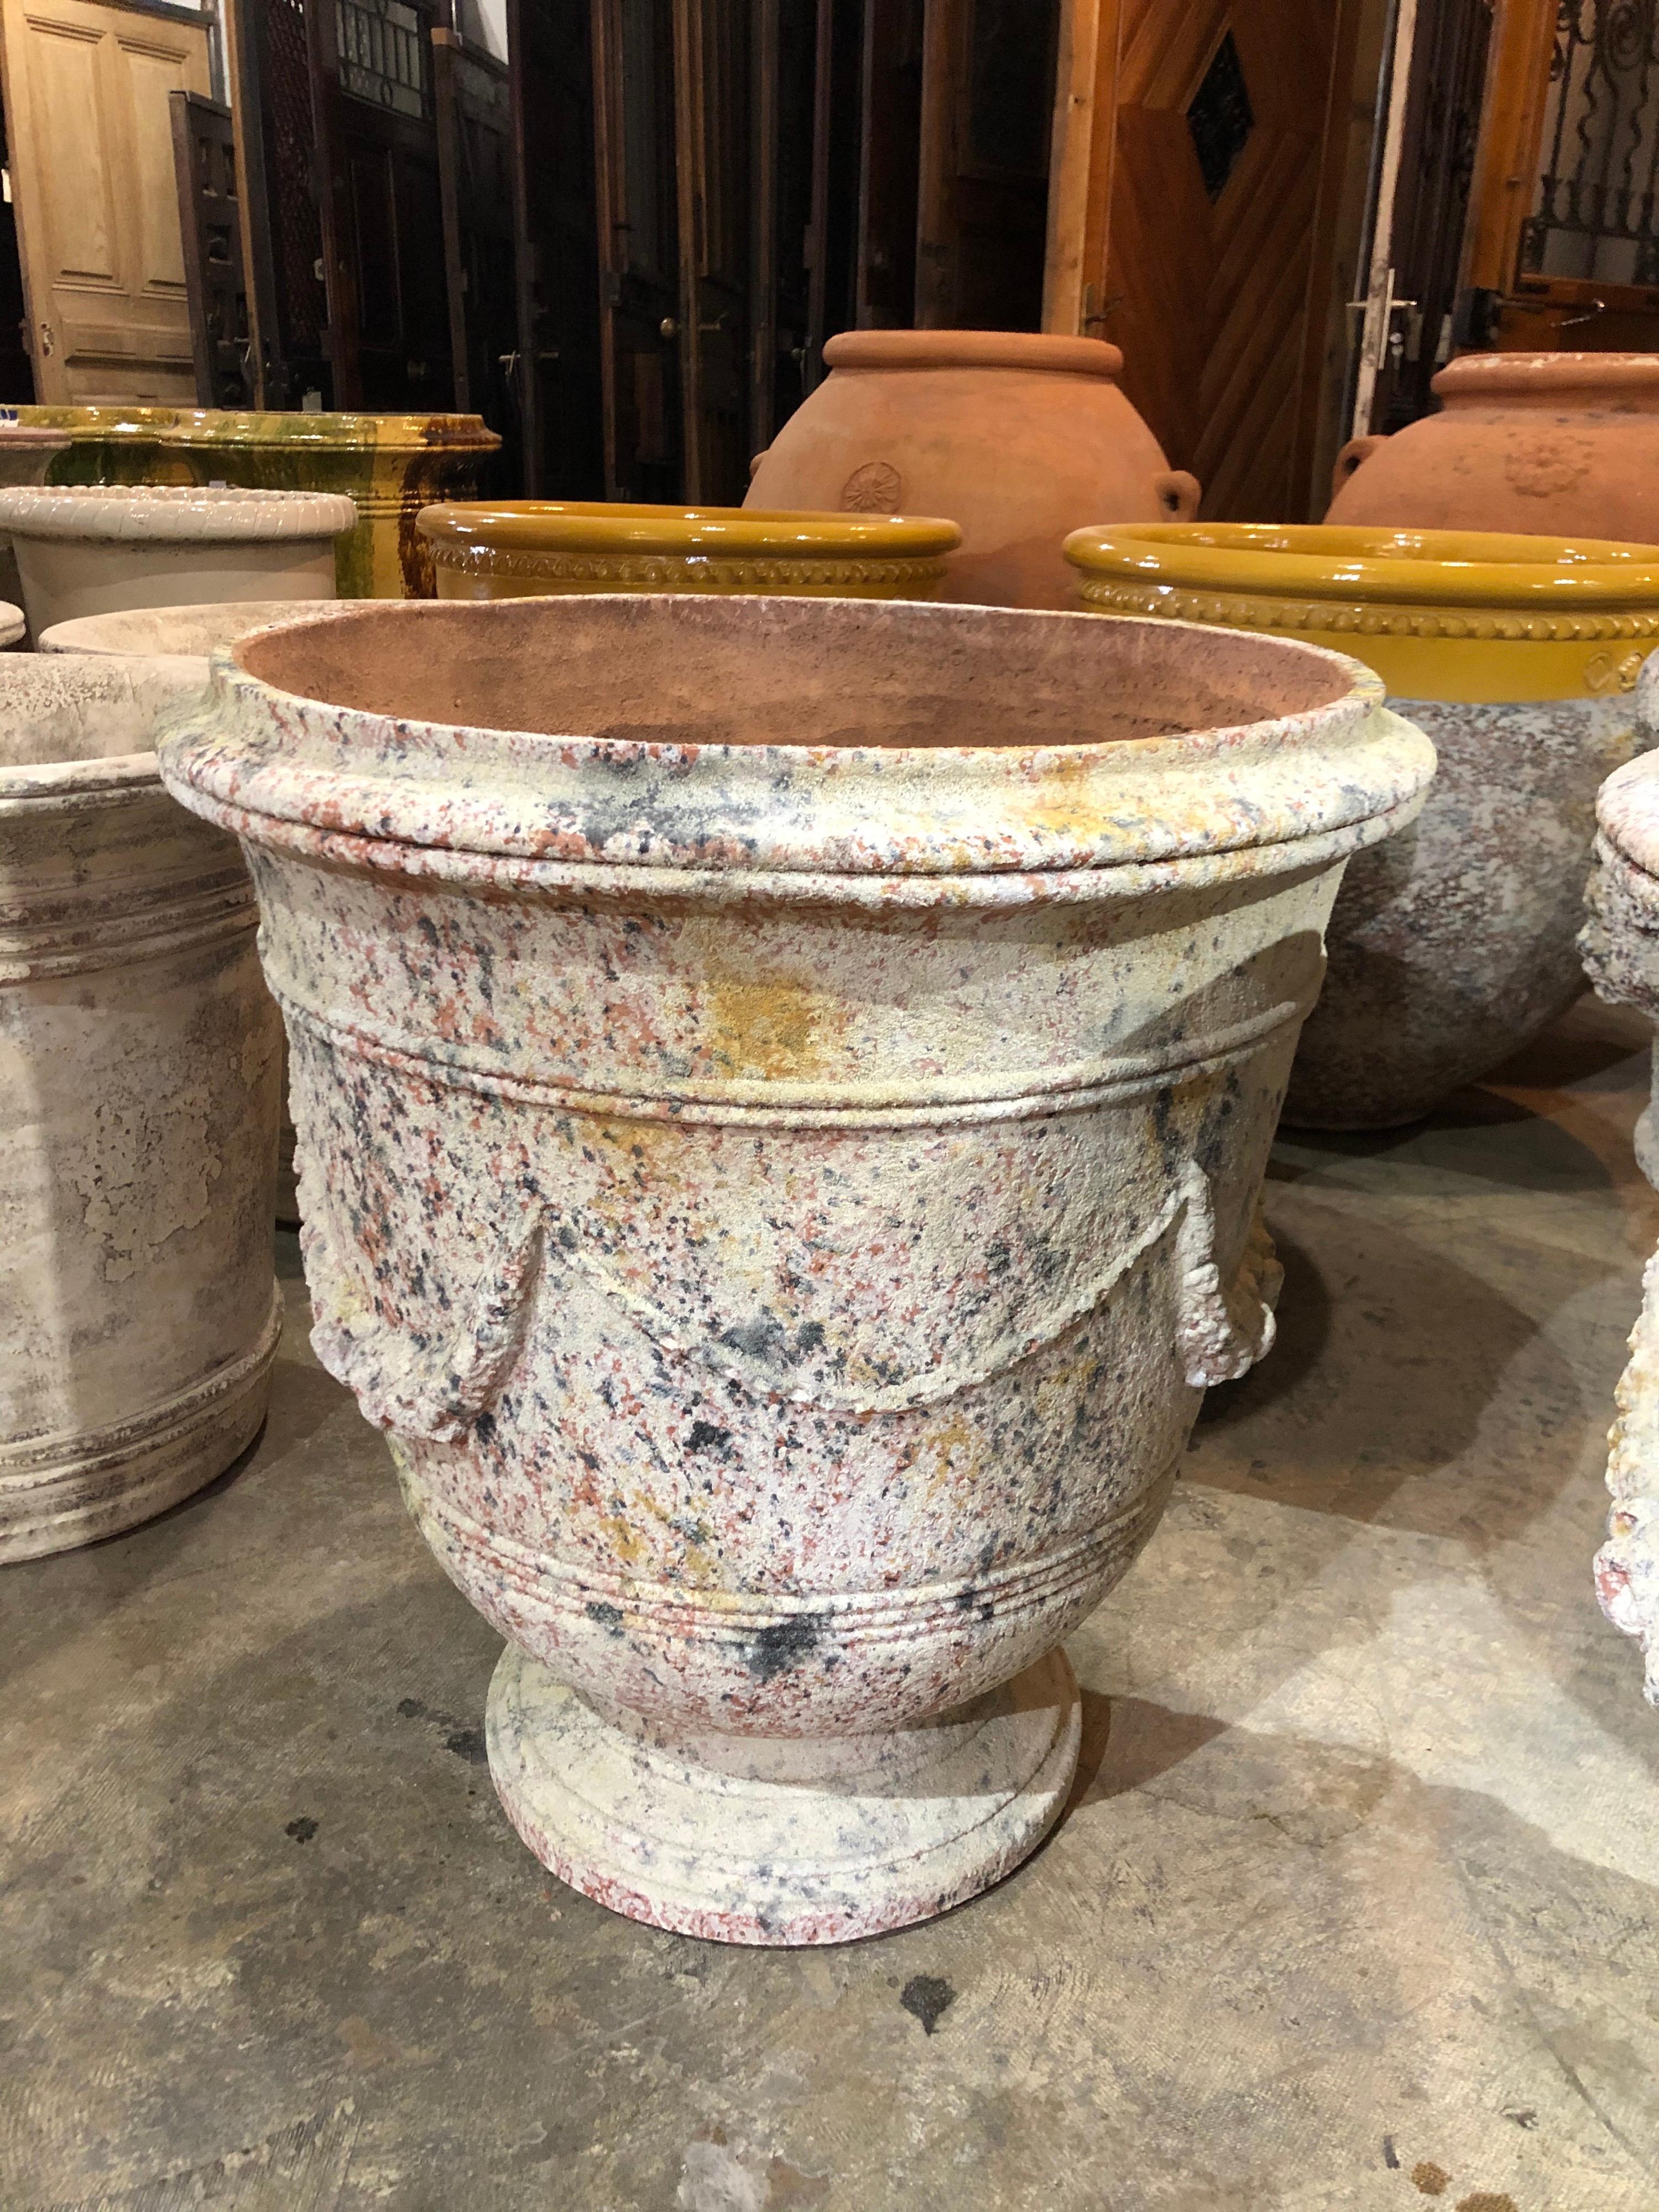 This beautiful handmade terracotta garland urn origins from France.